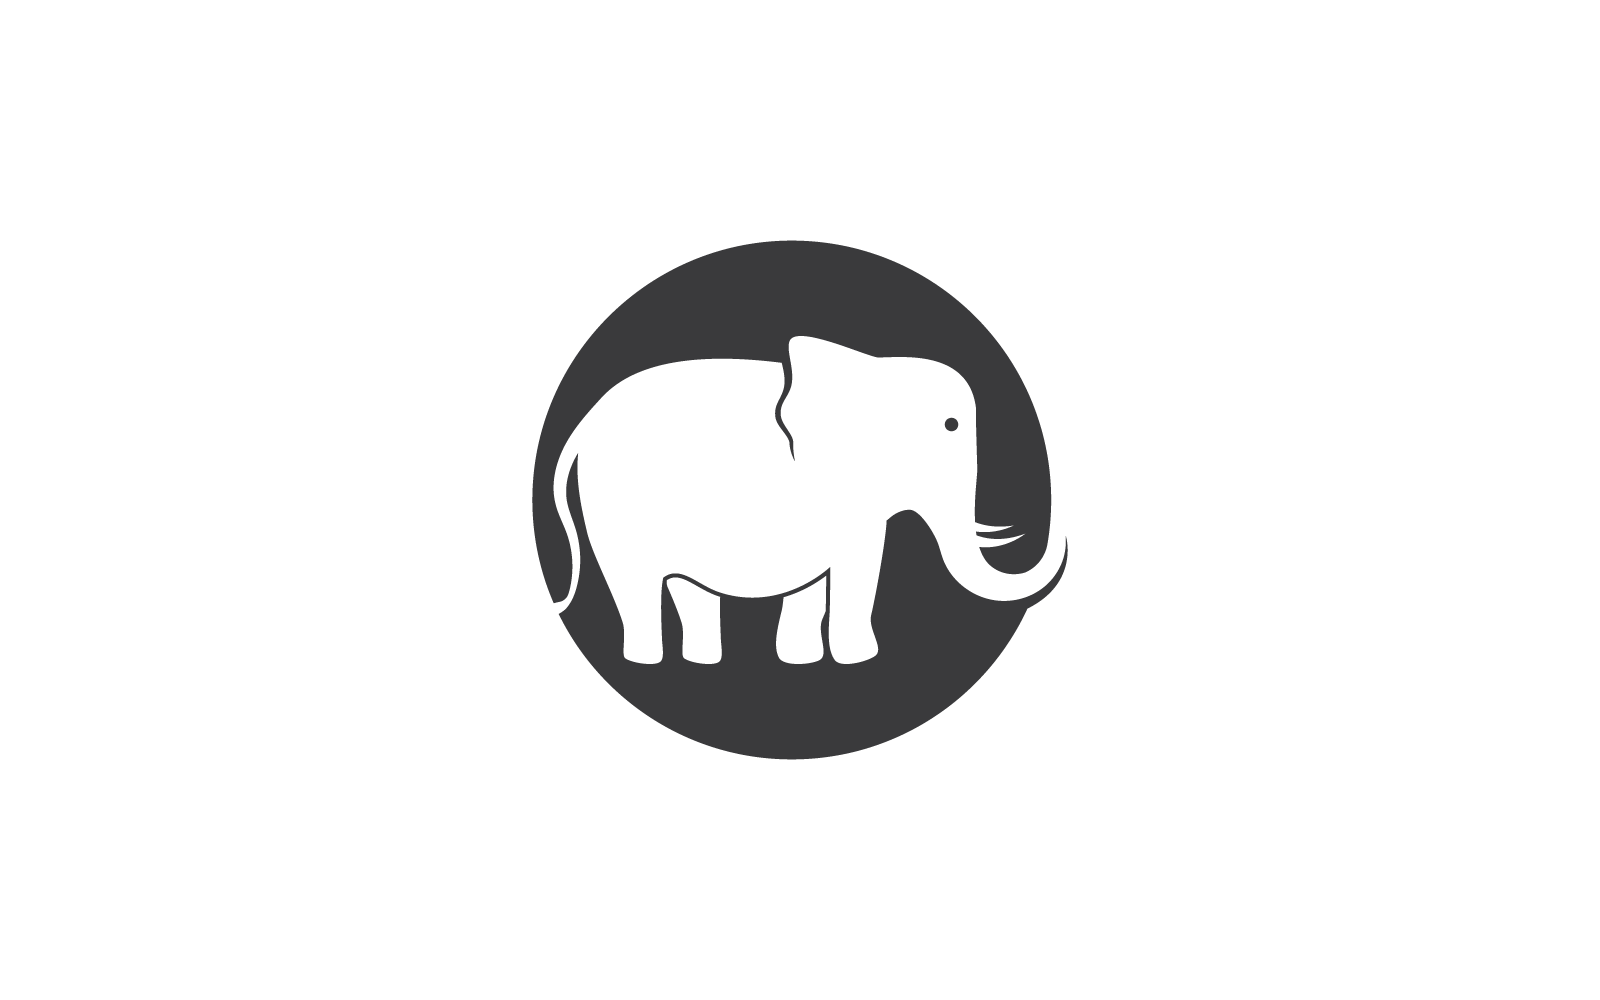 Elephant logo illustration flat design template